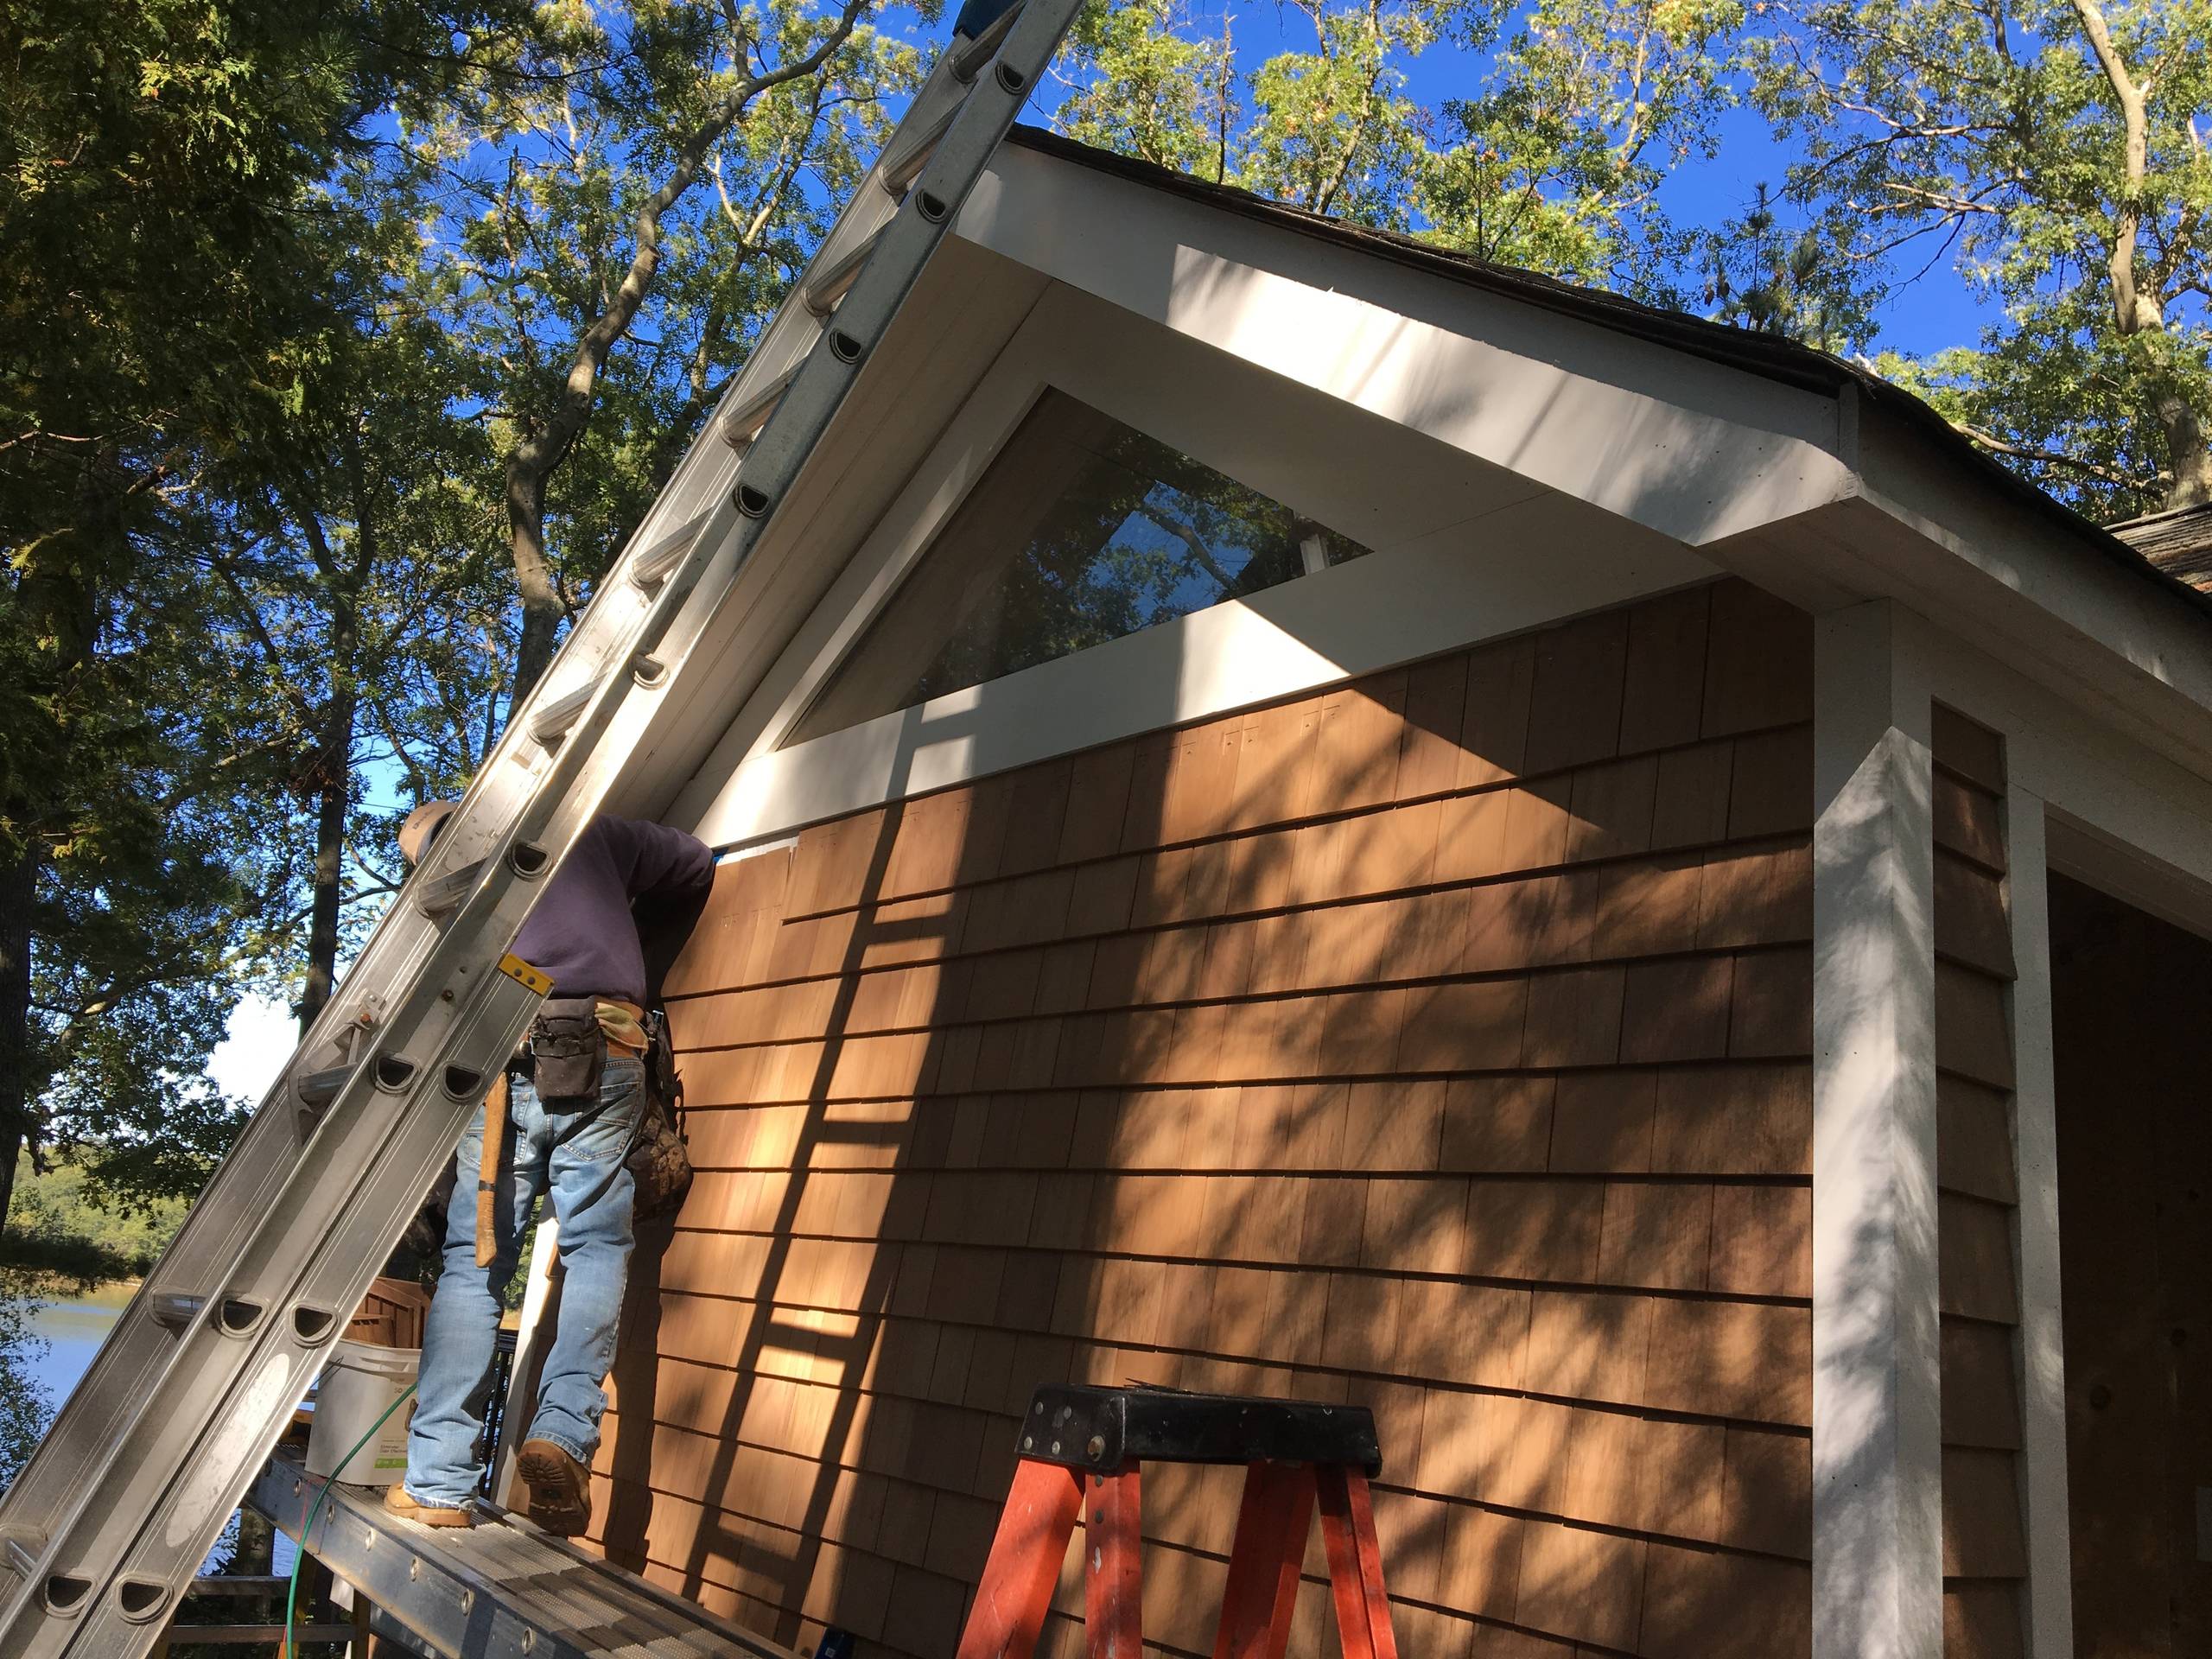 Lake house siding, windows and trim